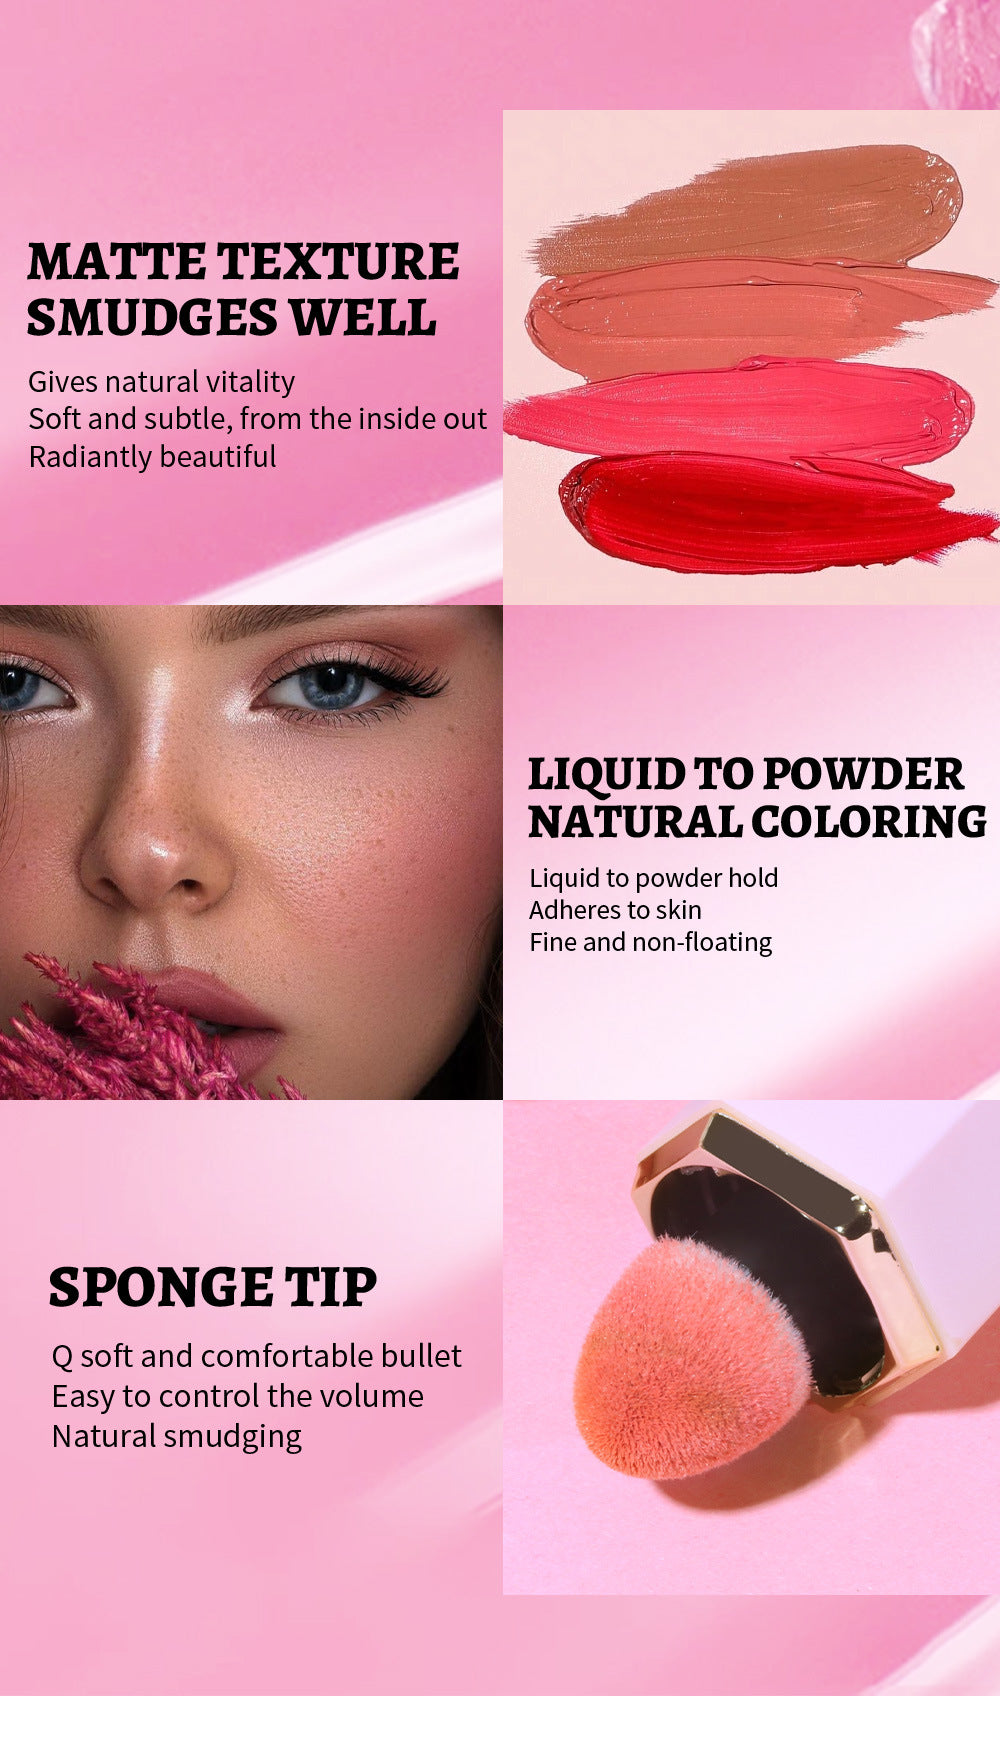 Monochromatic brightening rouge blush